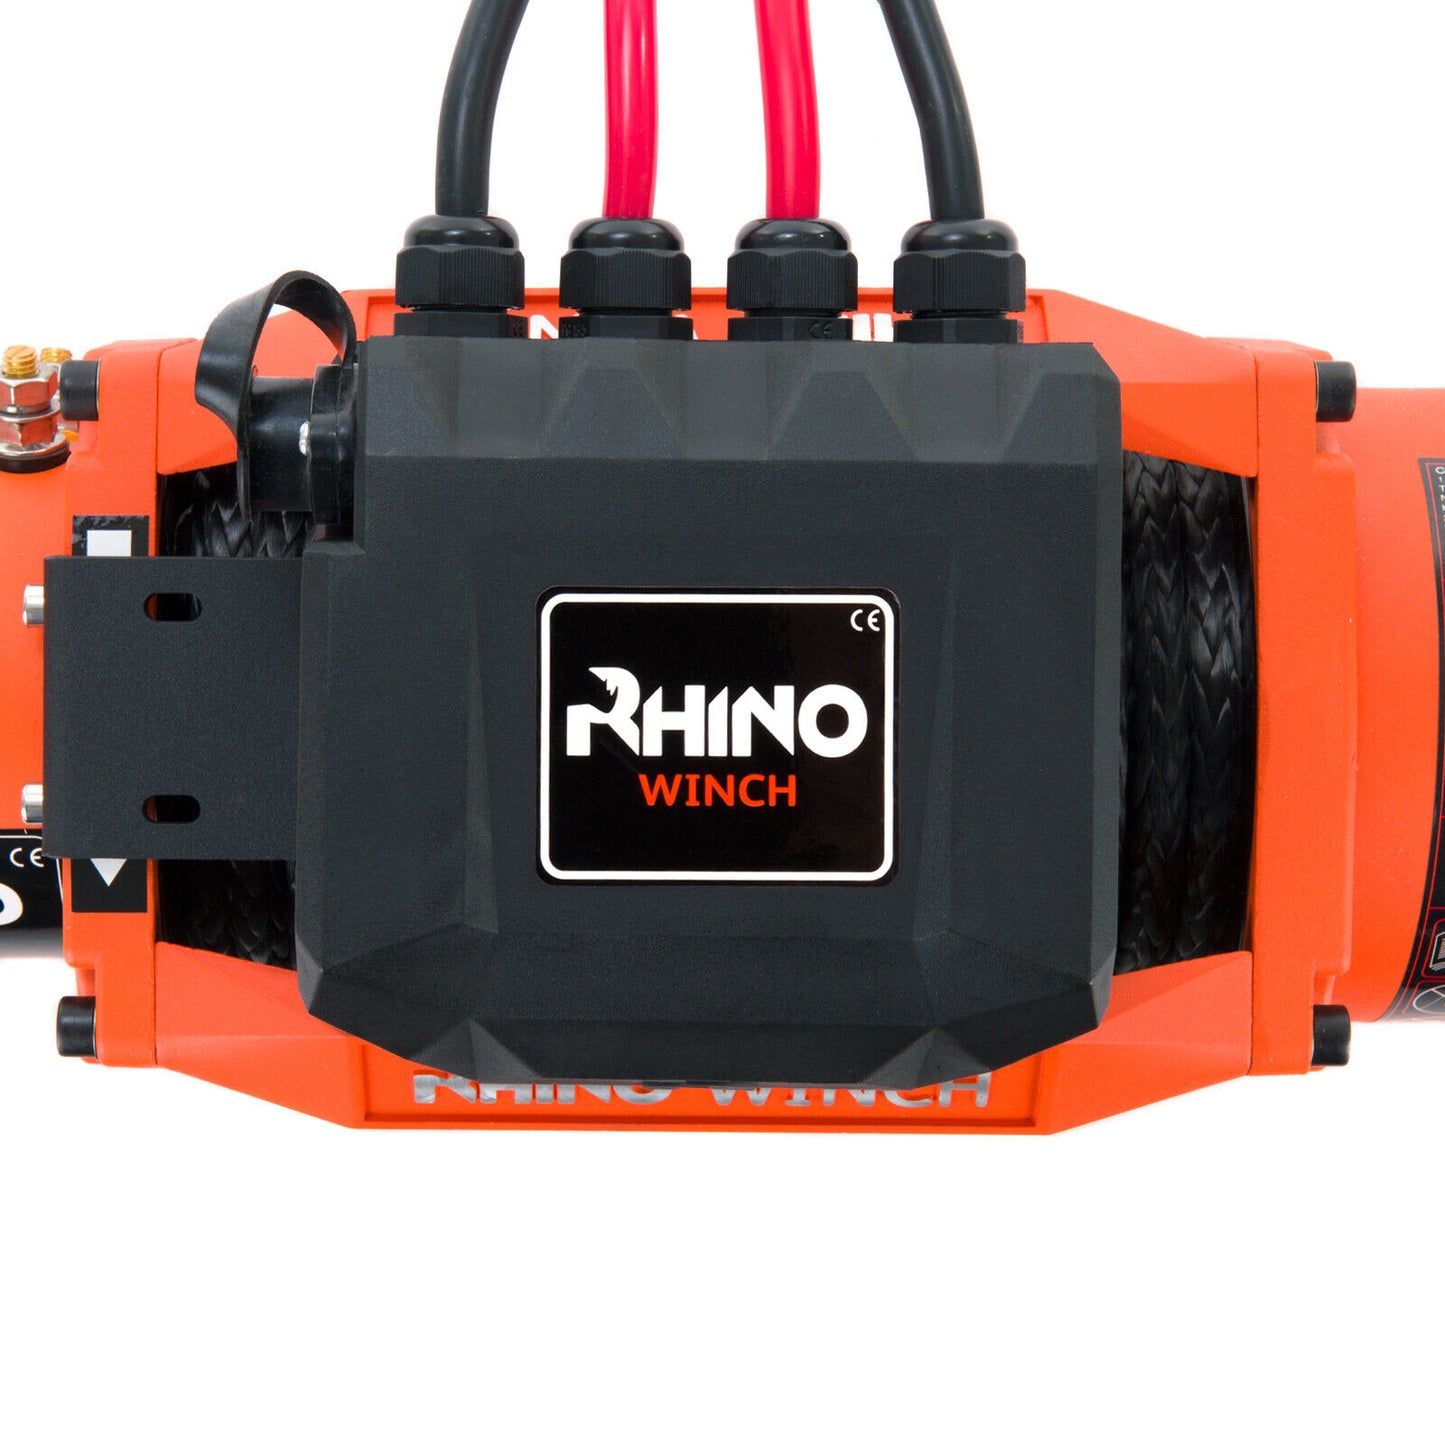 Rhino Electric Winch 24v 13500lbs Synthetic Dyneema Rope Fairlead Remote Control